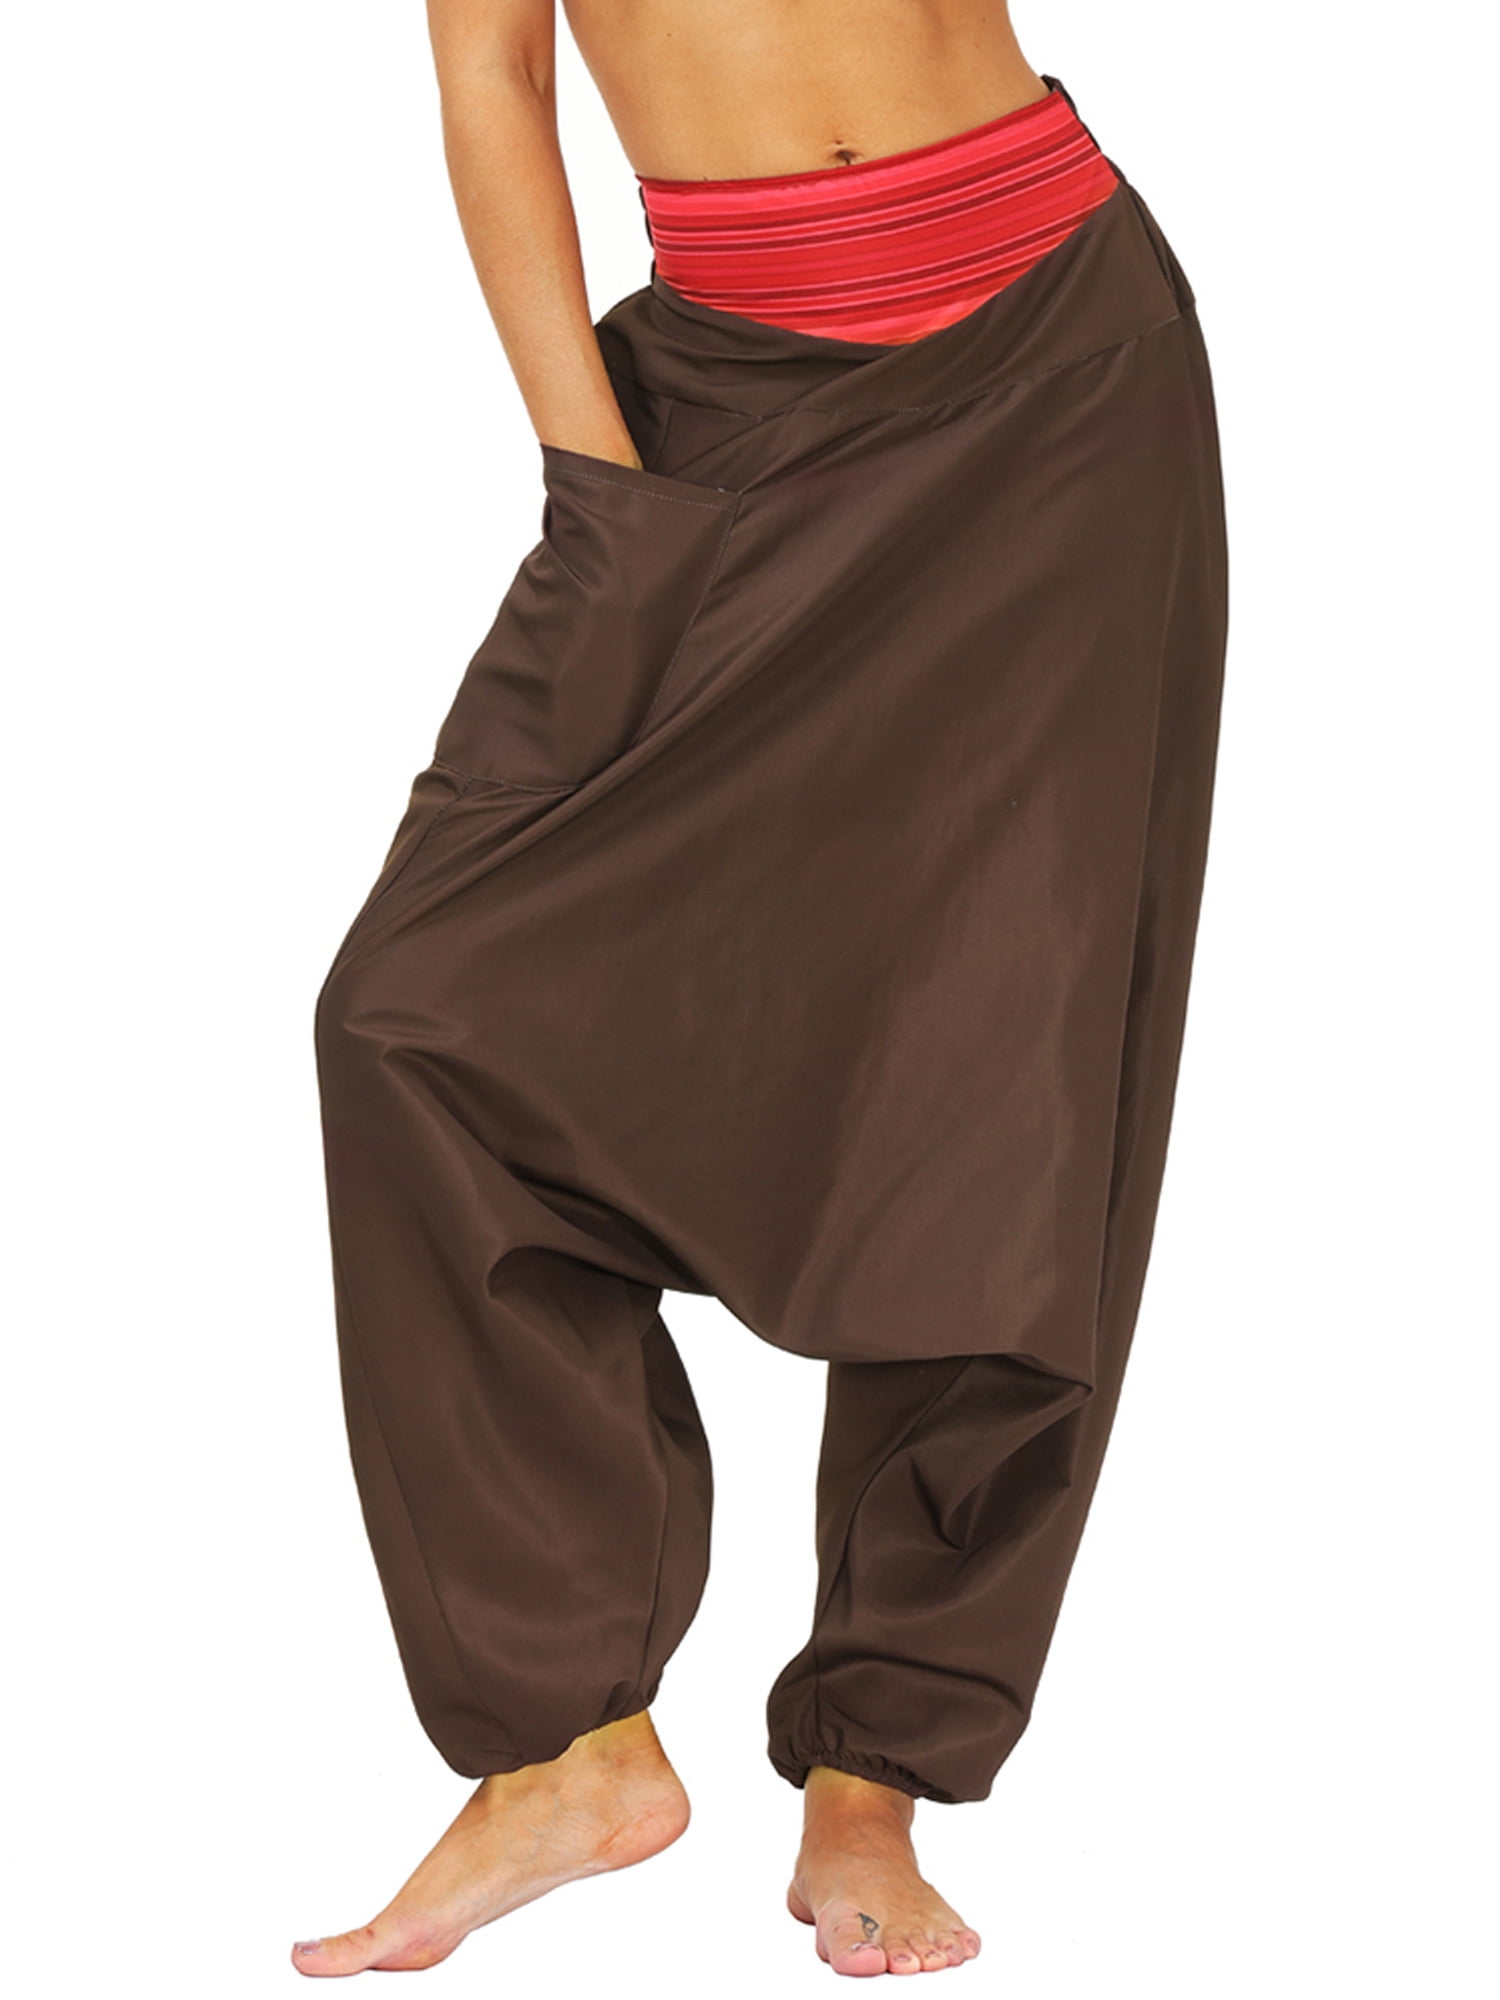 Boho Warm Winter Harem Trouser Baggy Aladdin Pants Gypsy Yoga Festival One Size